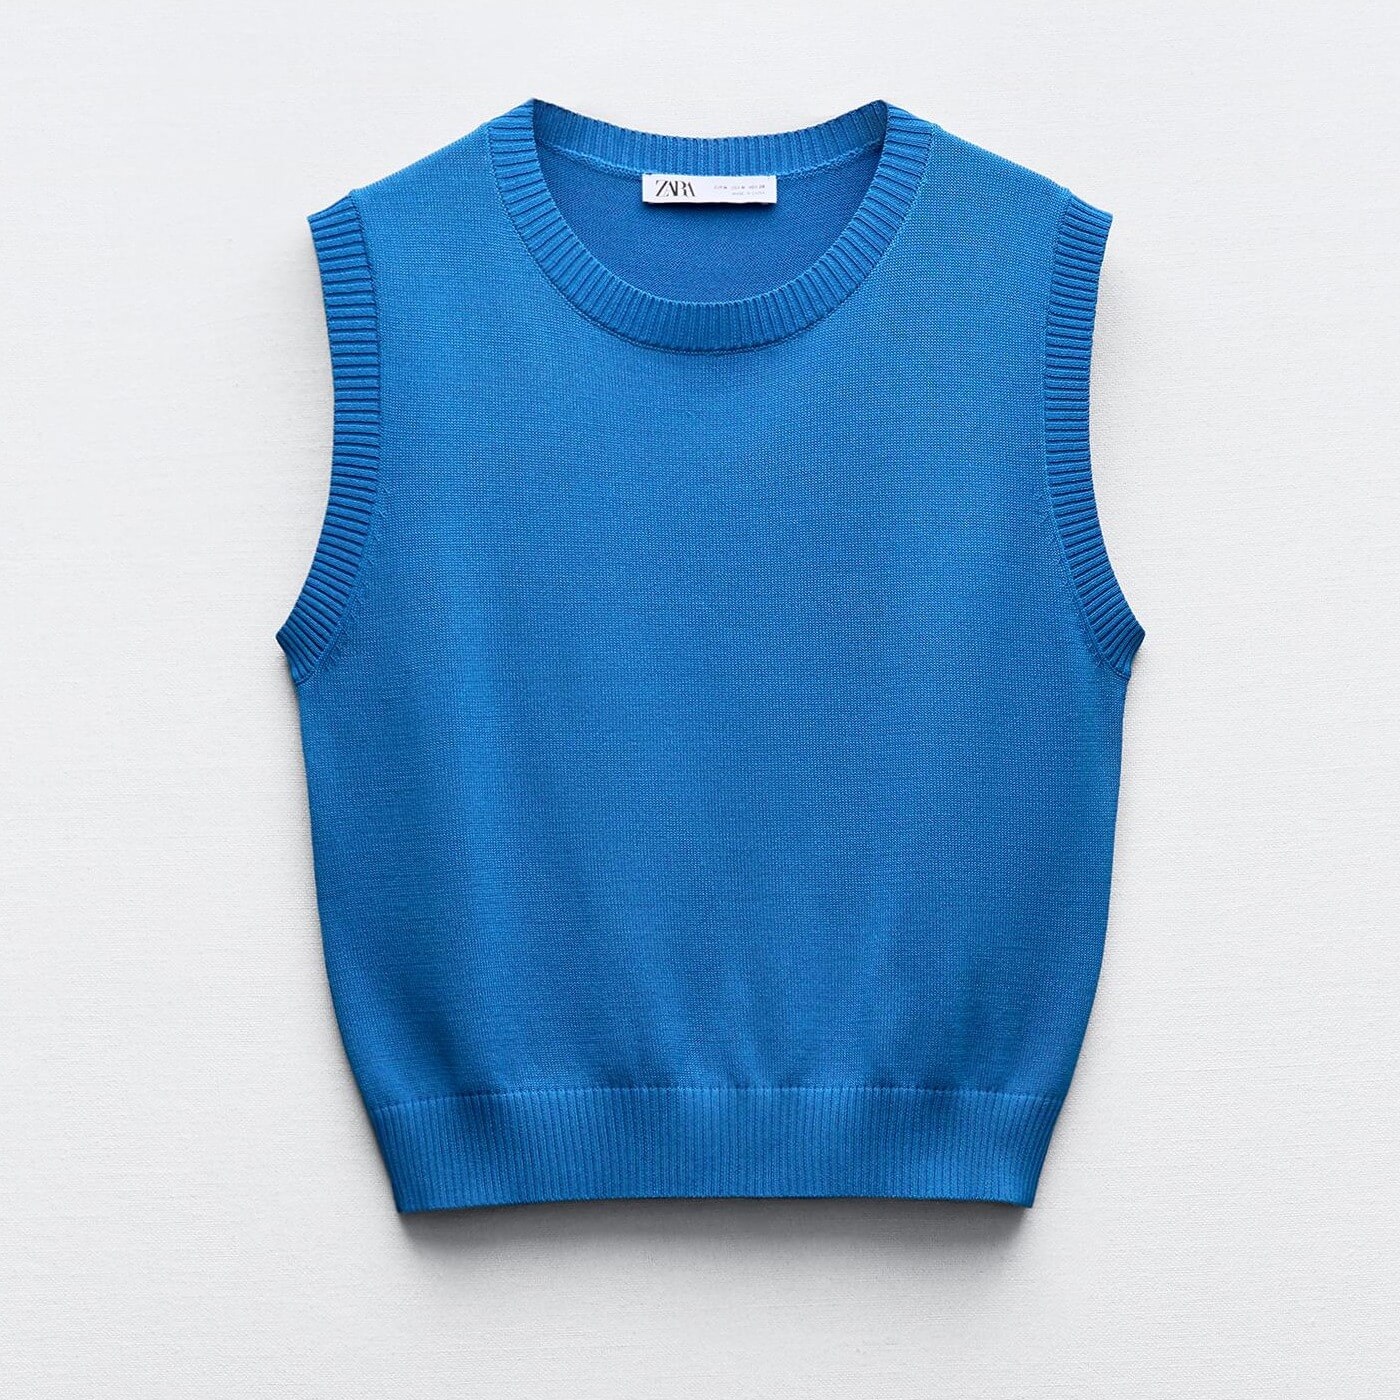 Топ Zara Plain Knit Sleeveless, голубой топ zara sleeveless knit semi sheer черный